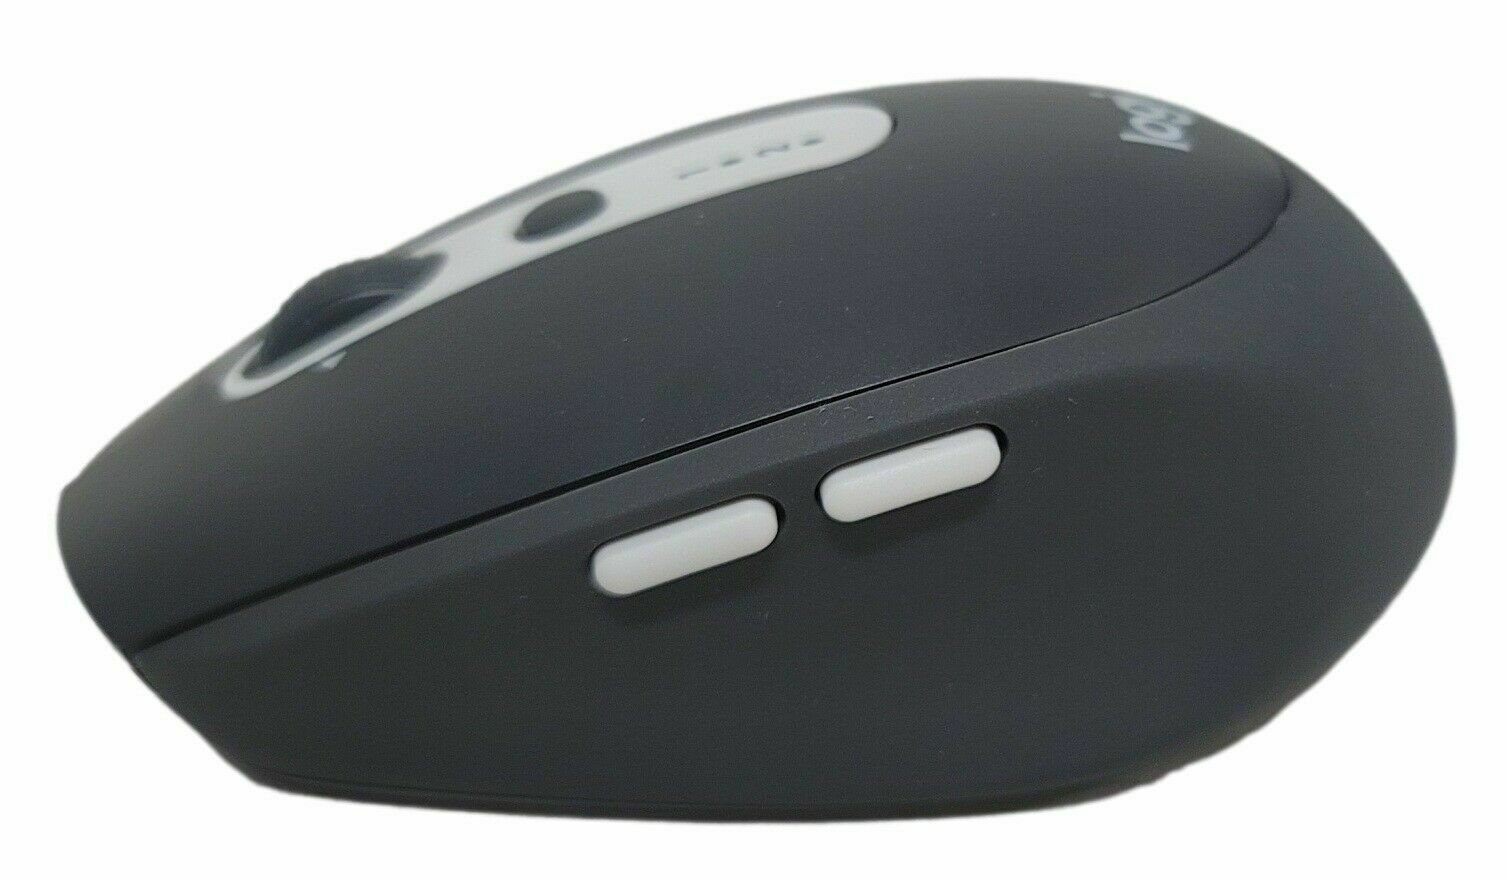 Logitech Palm Rest Wireless Keyboard K850 and M585 Mouse Combo,